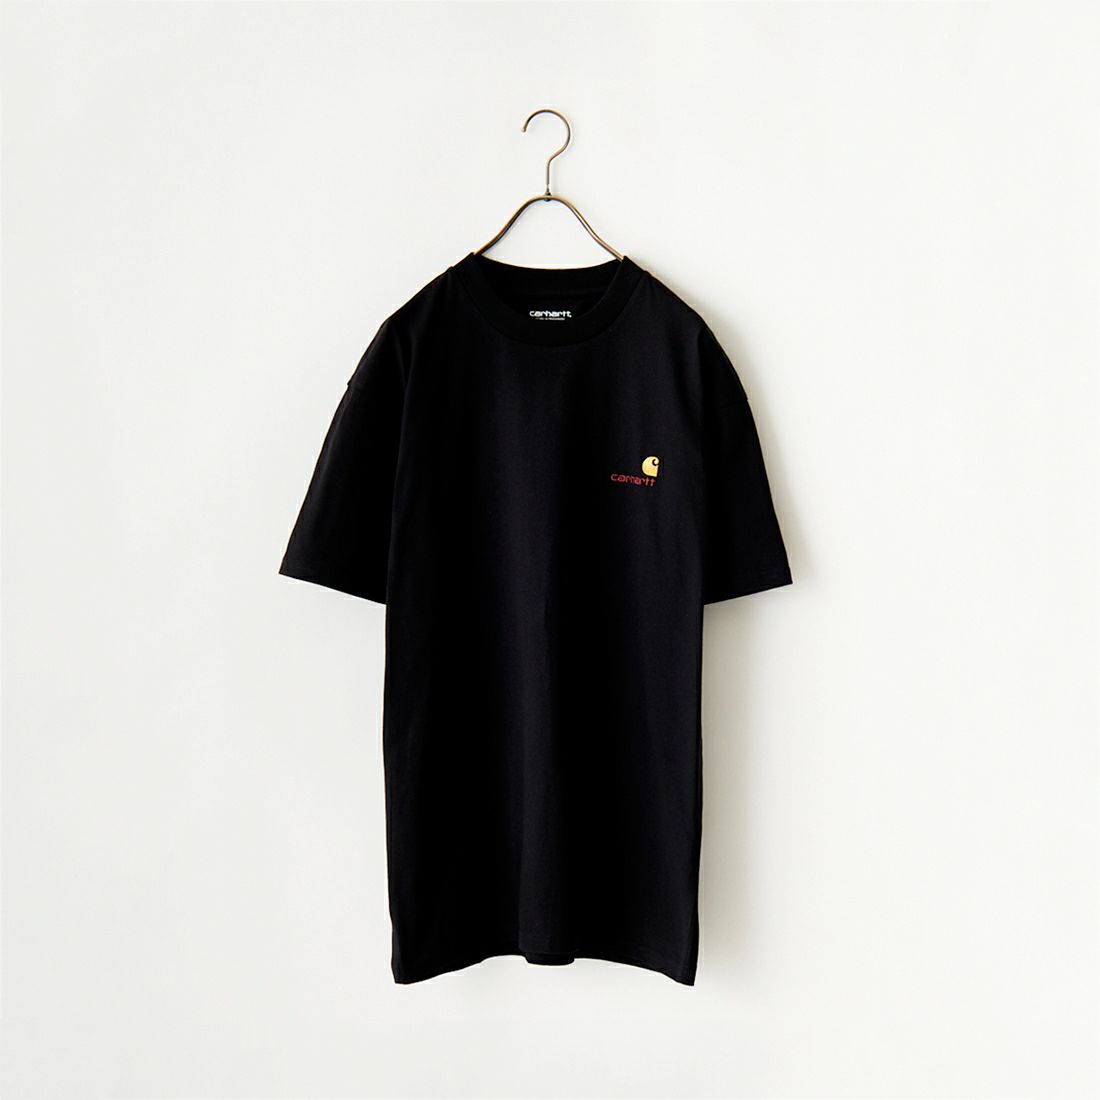 carhartt WIP [カーハートダブリューアイピー] ショートスリーブアメリカンスクリプトTシャツ [I029956] BLACK